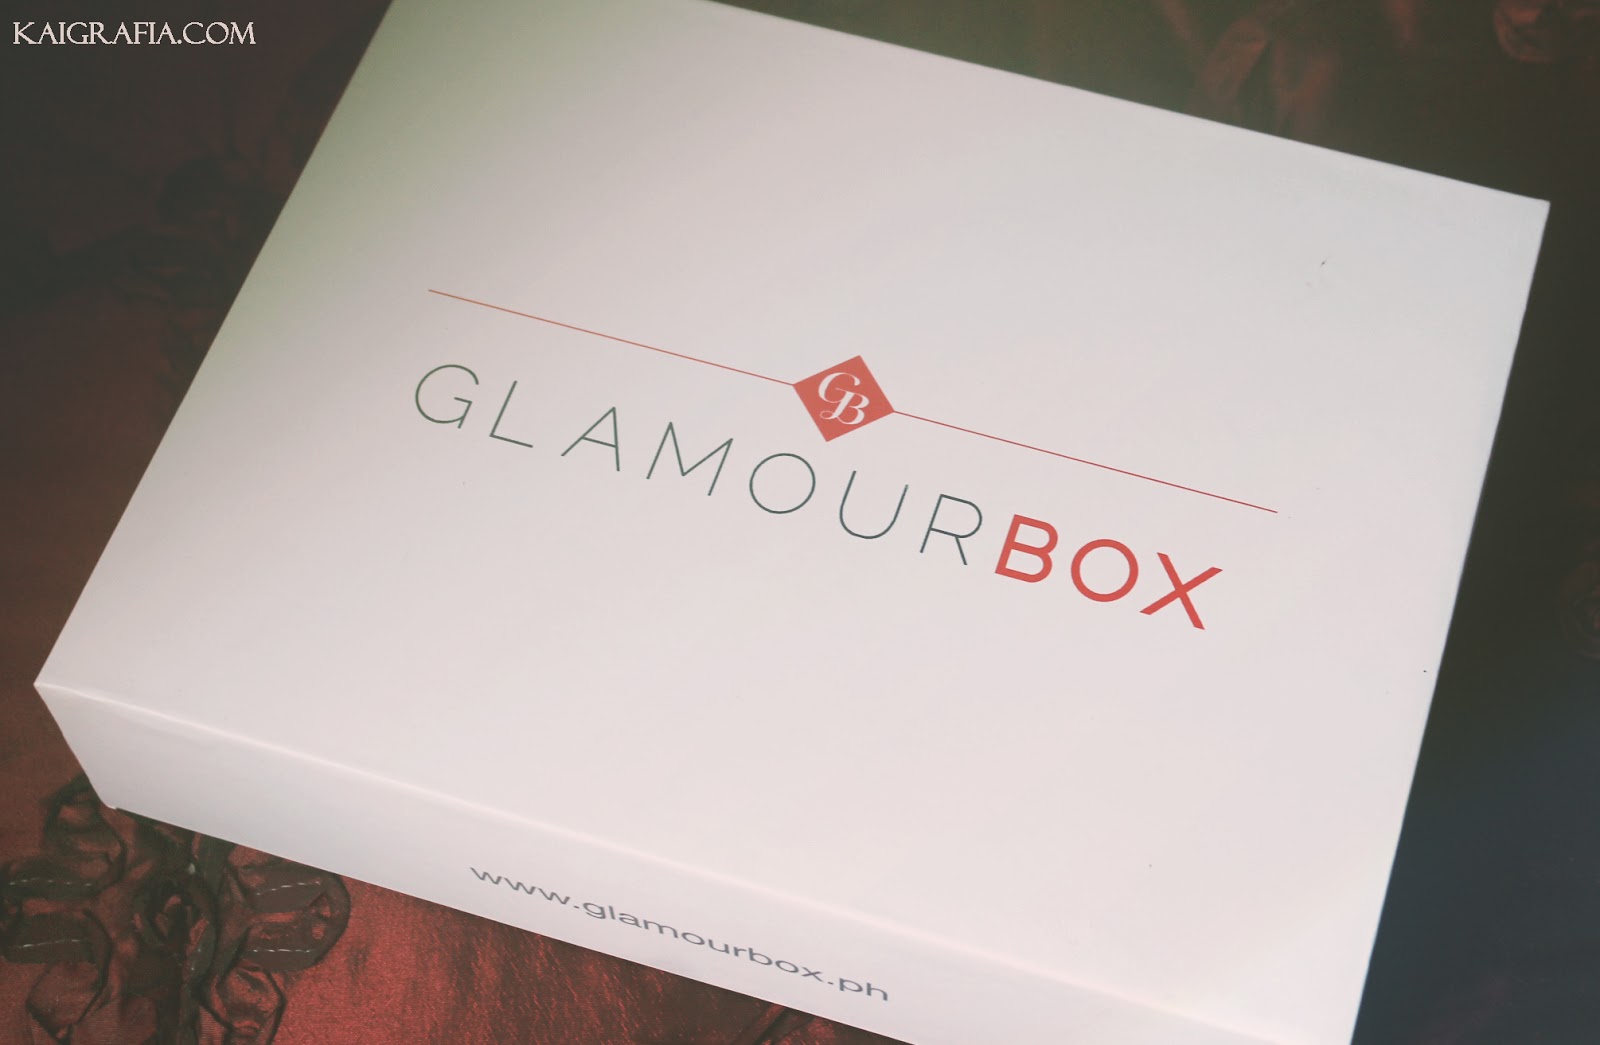 GlamourBox iPhone like box